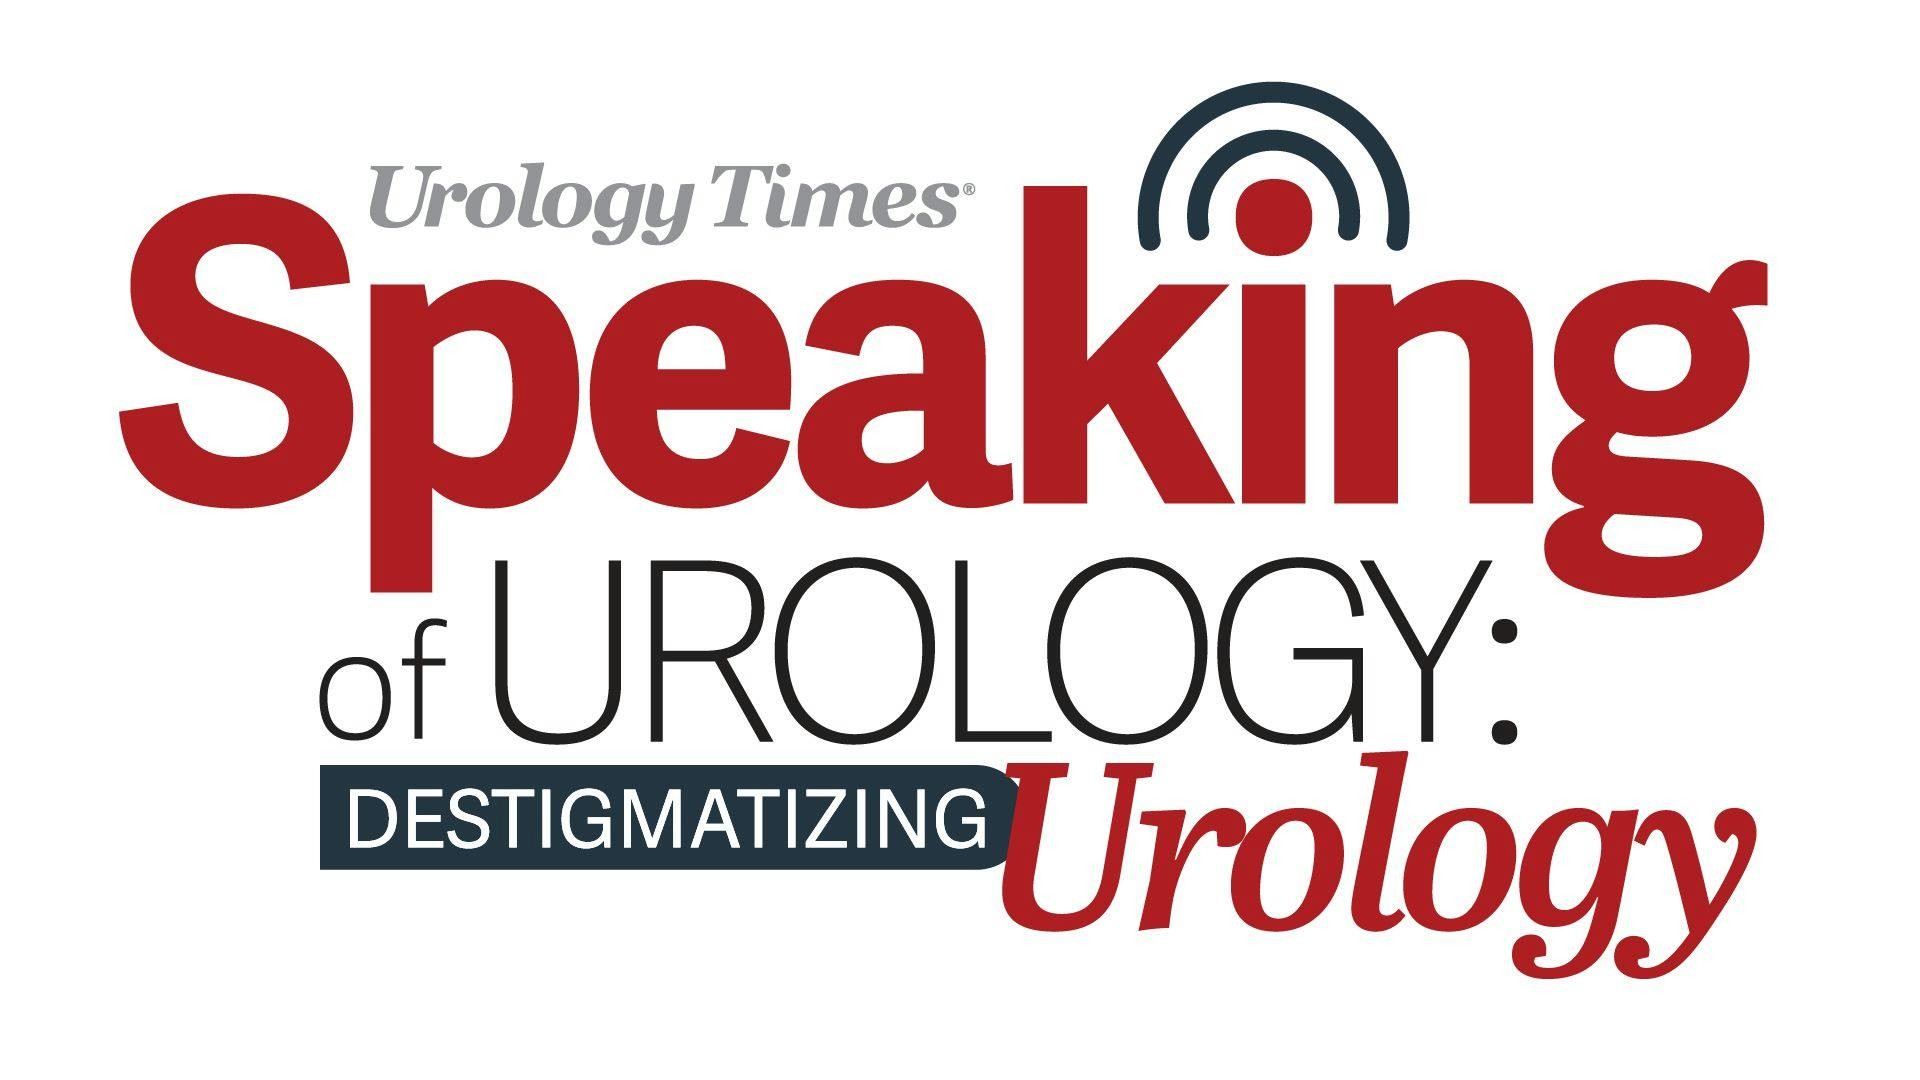 Destigmatizing Urology: Dr. Espinosa discusses lifestyle changes